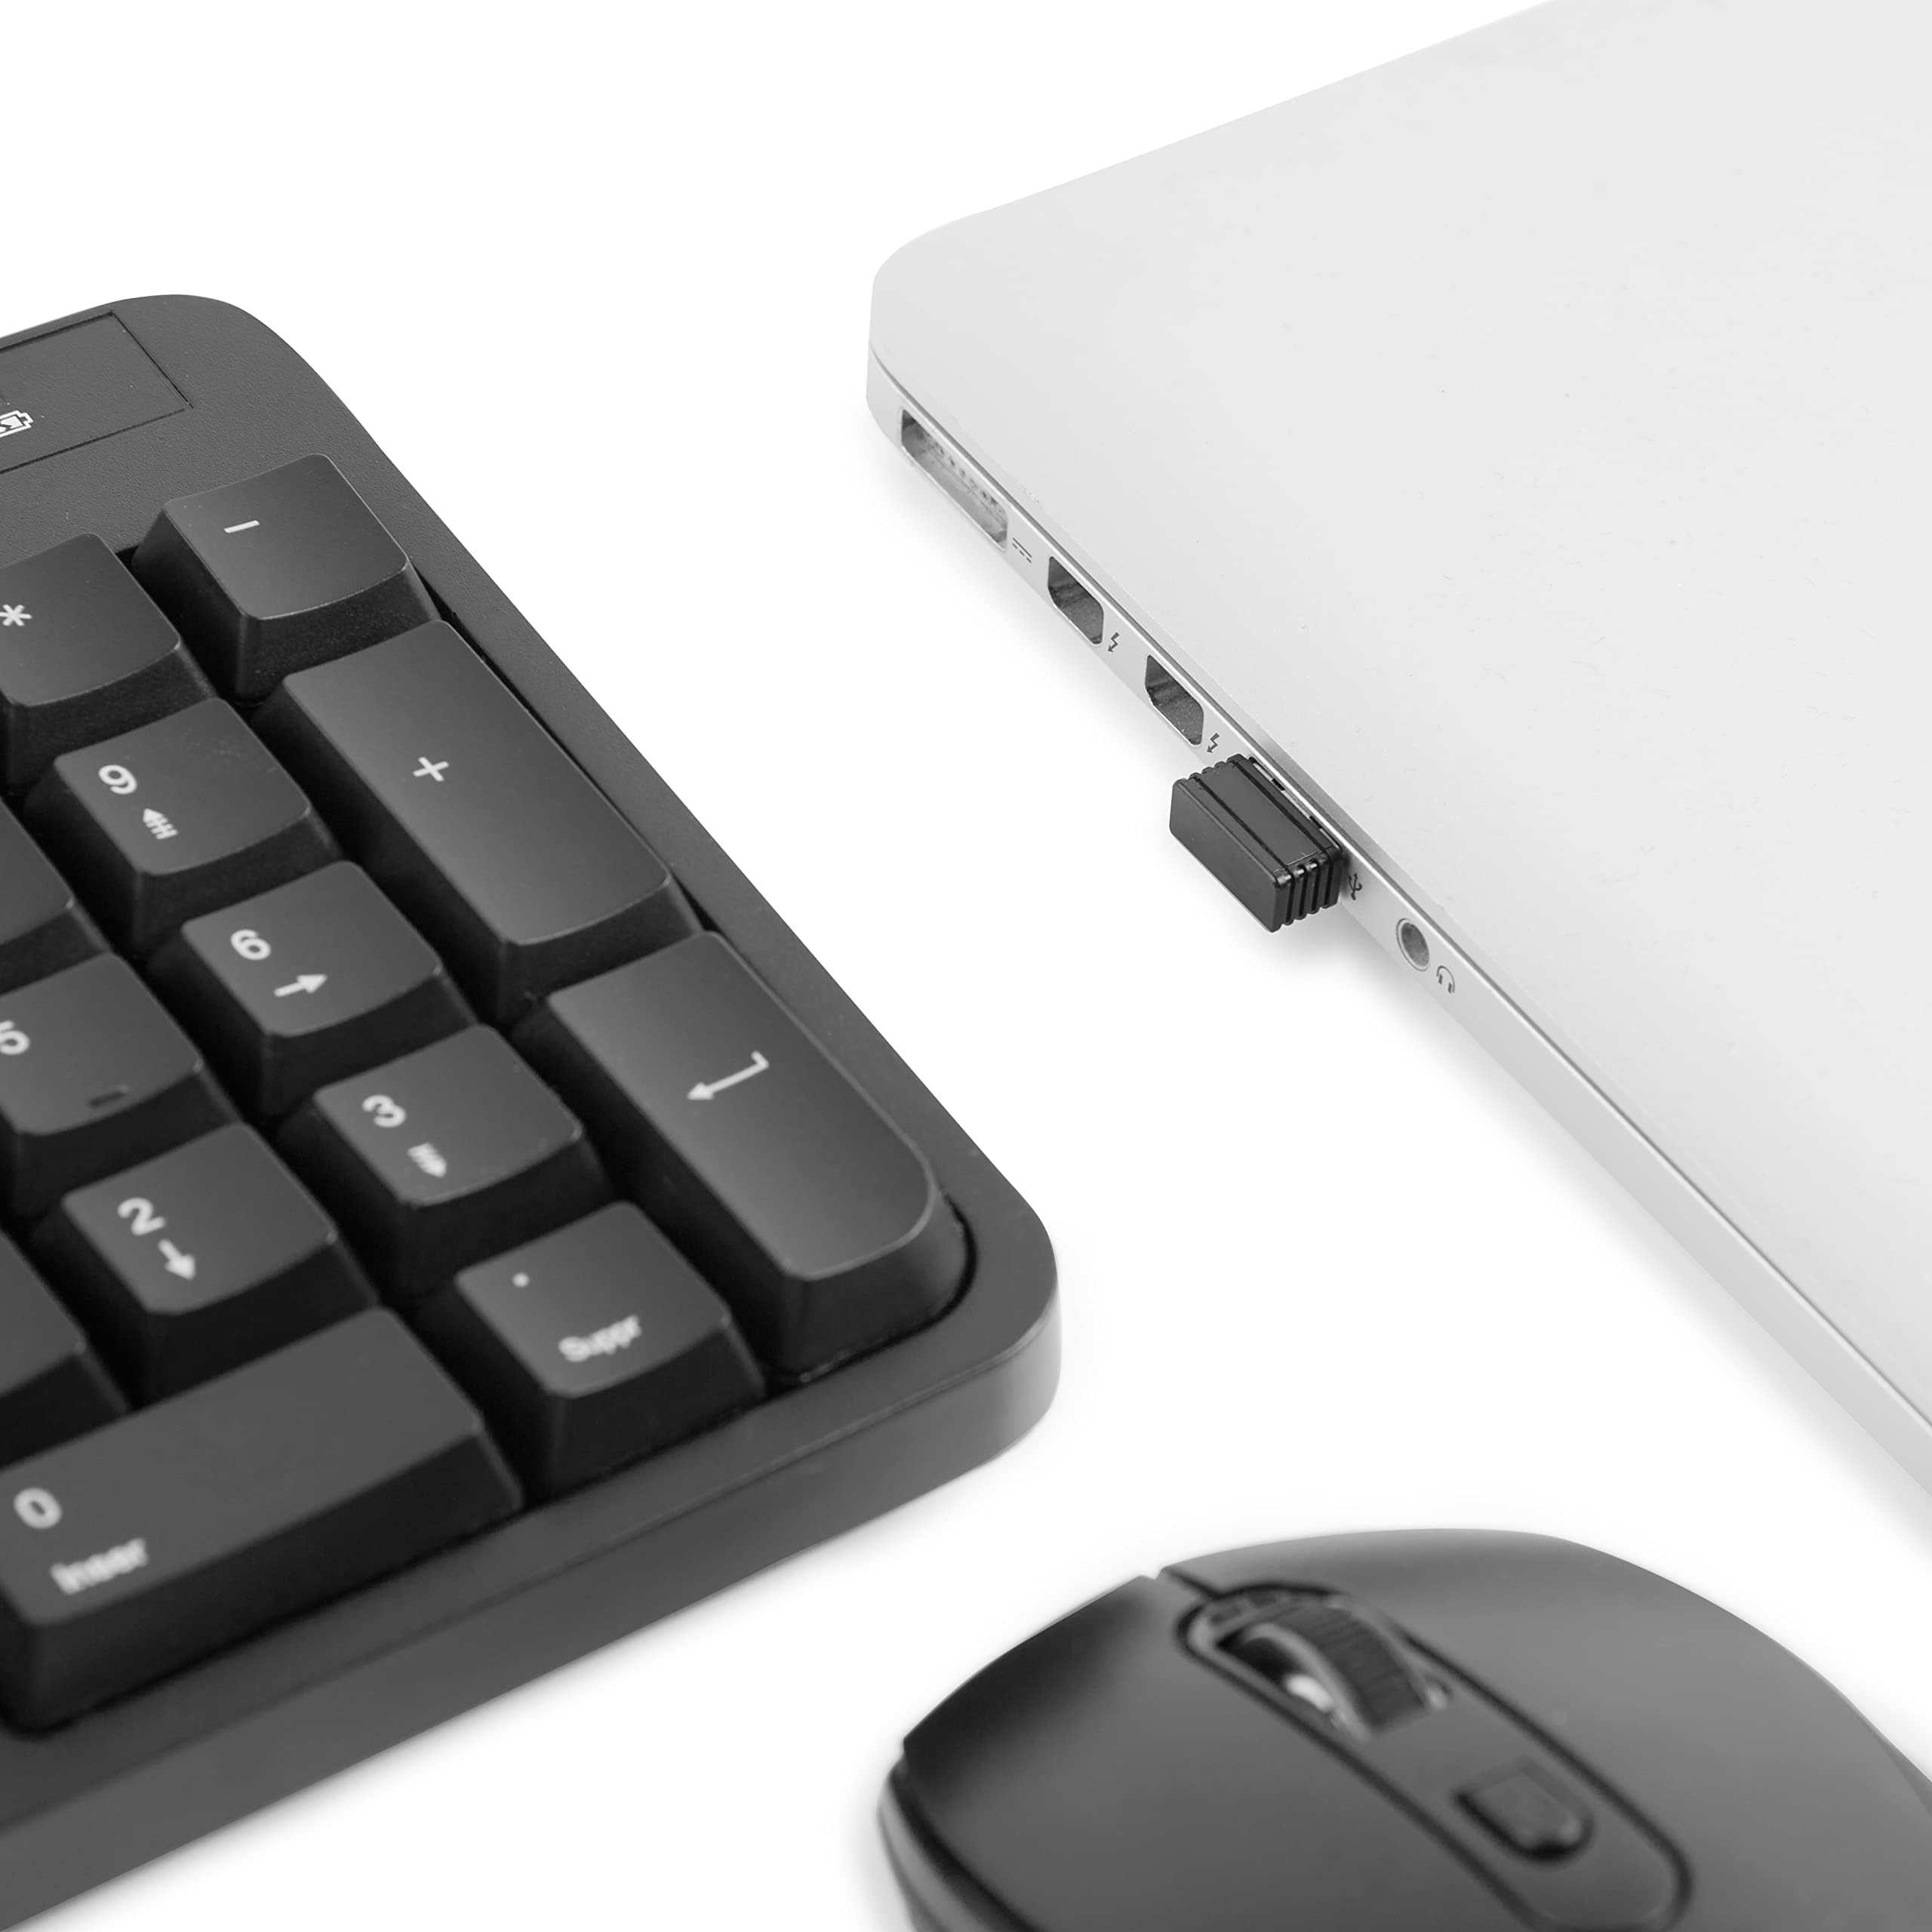 Amazon Basics Ergonomic Wireless Keyboard Mouse Combo - QWERTY - Black